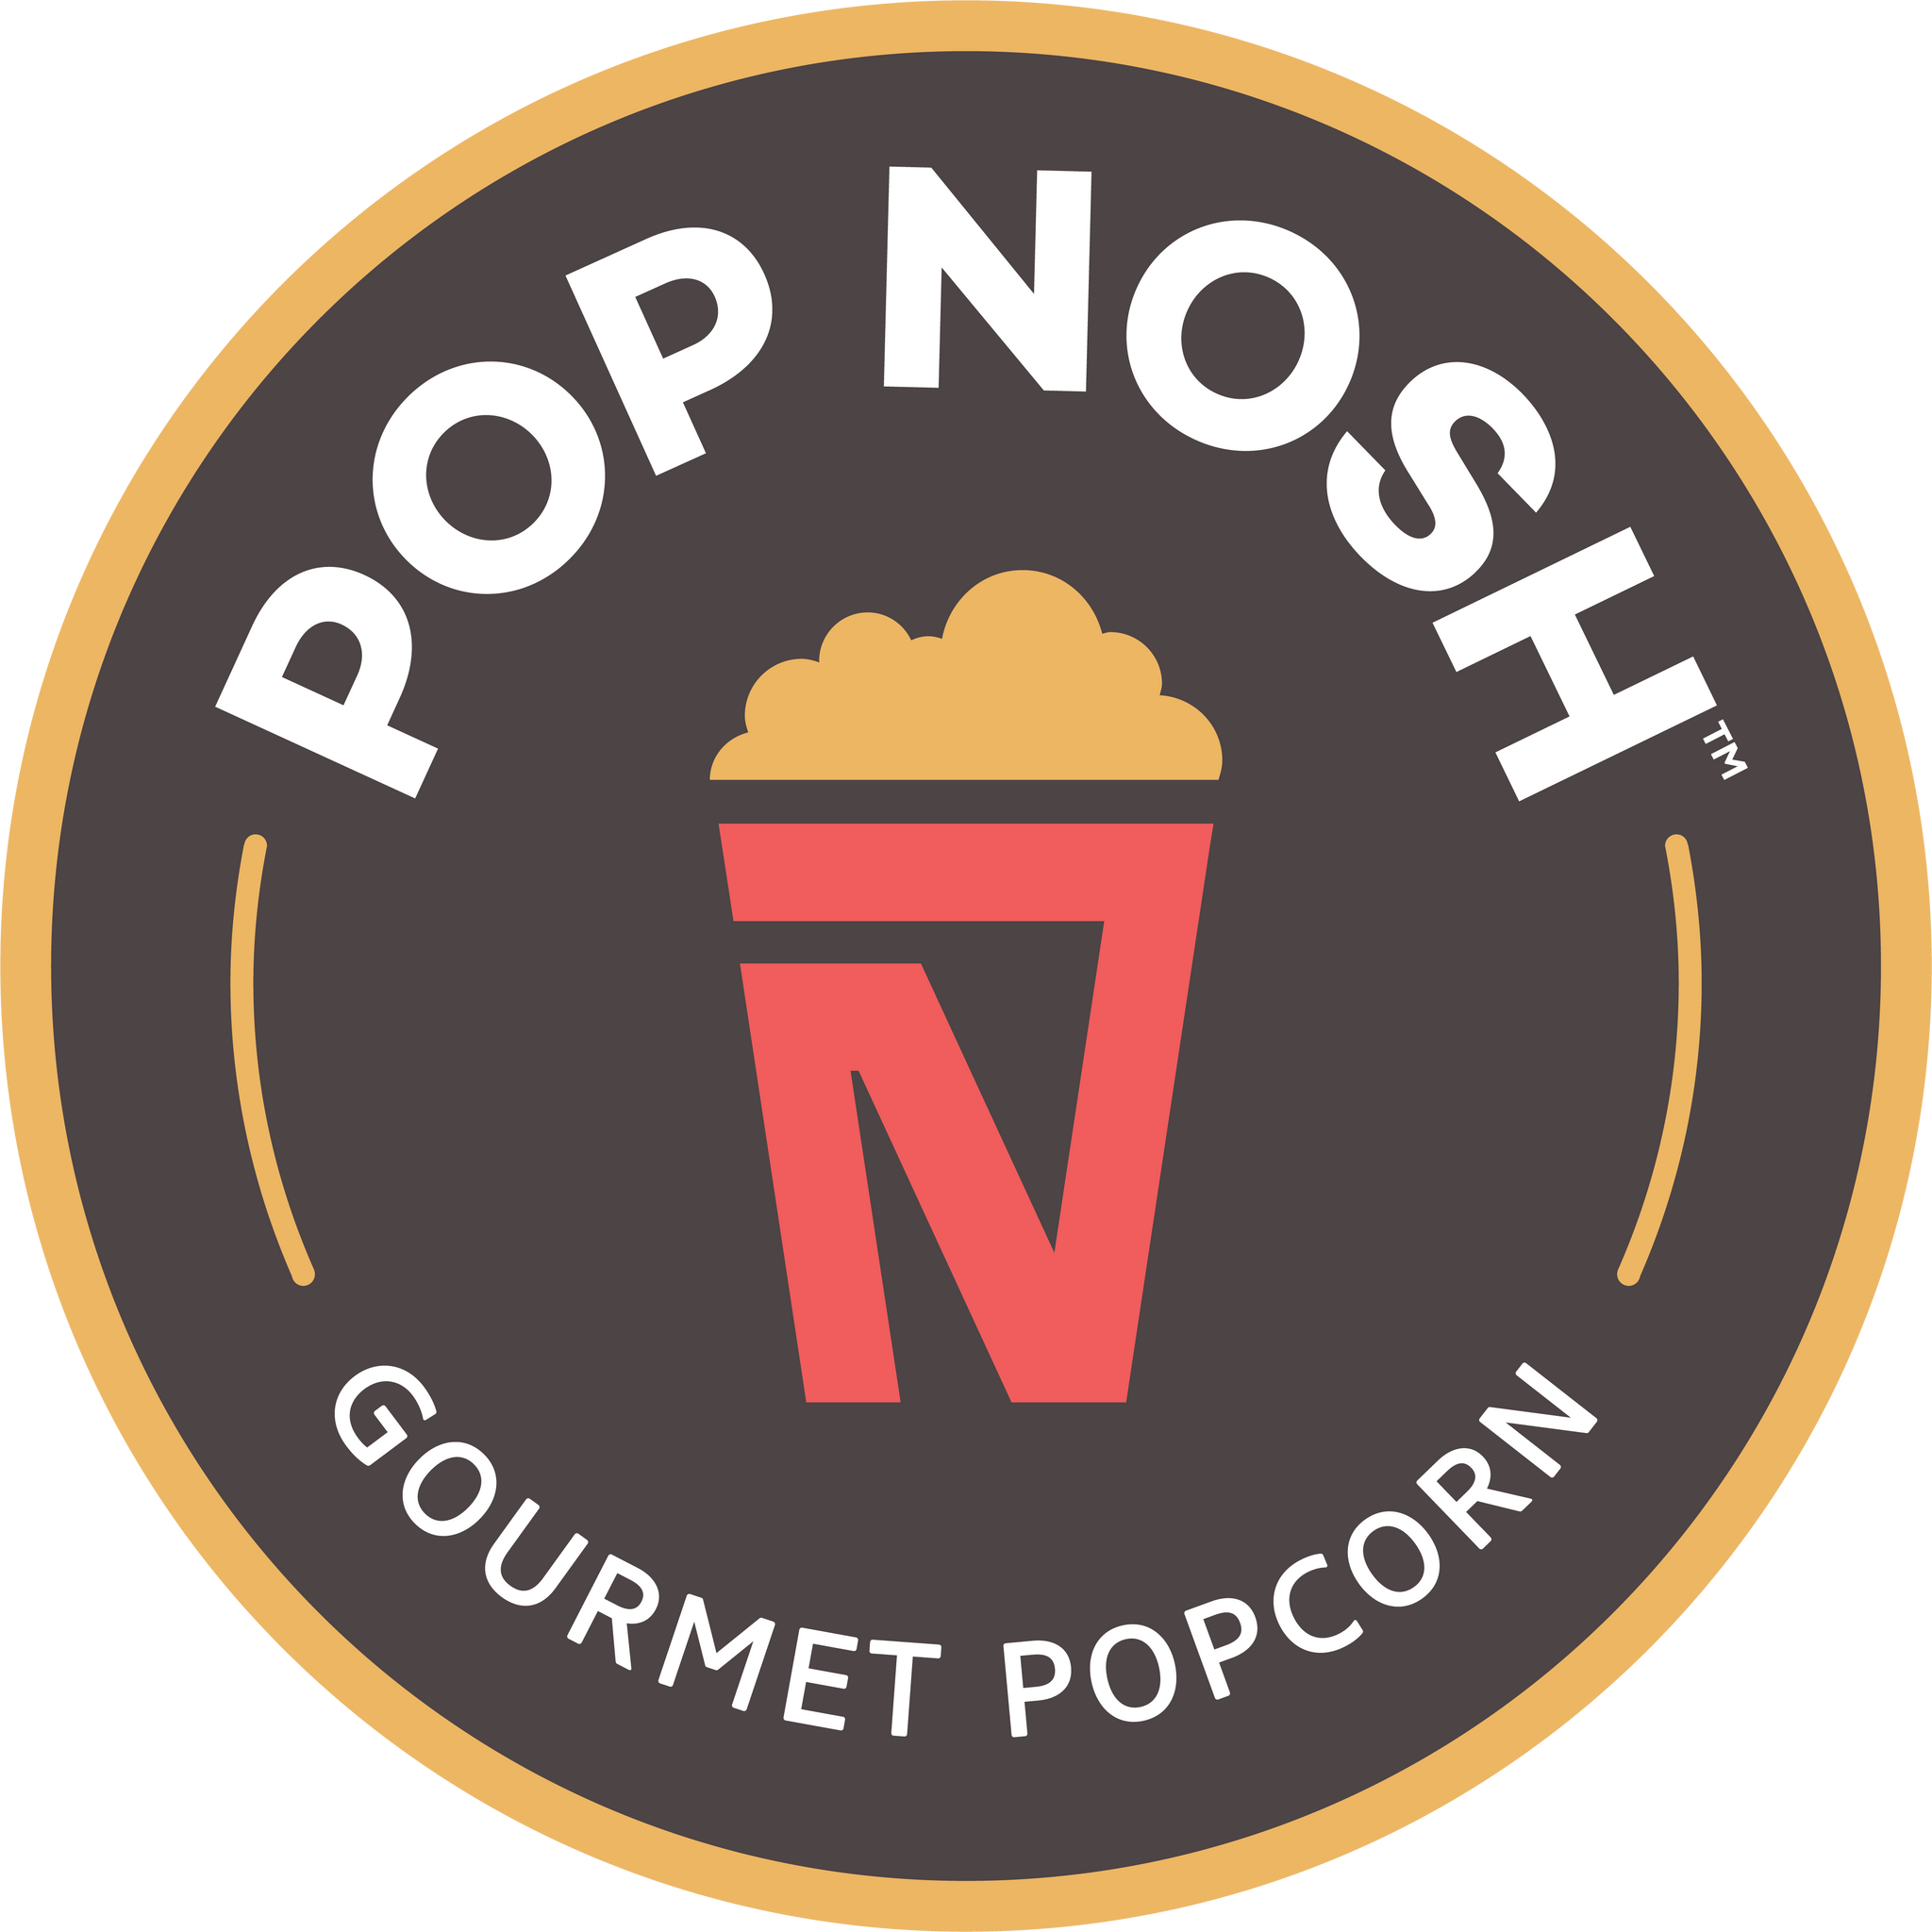 Build your own popcorn tin | Pop Nosh